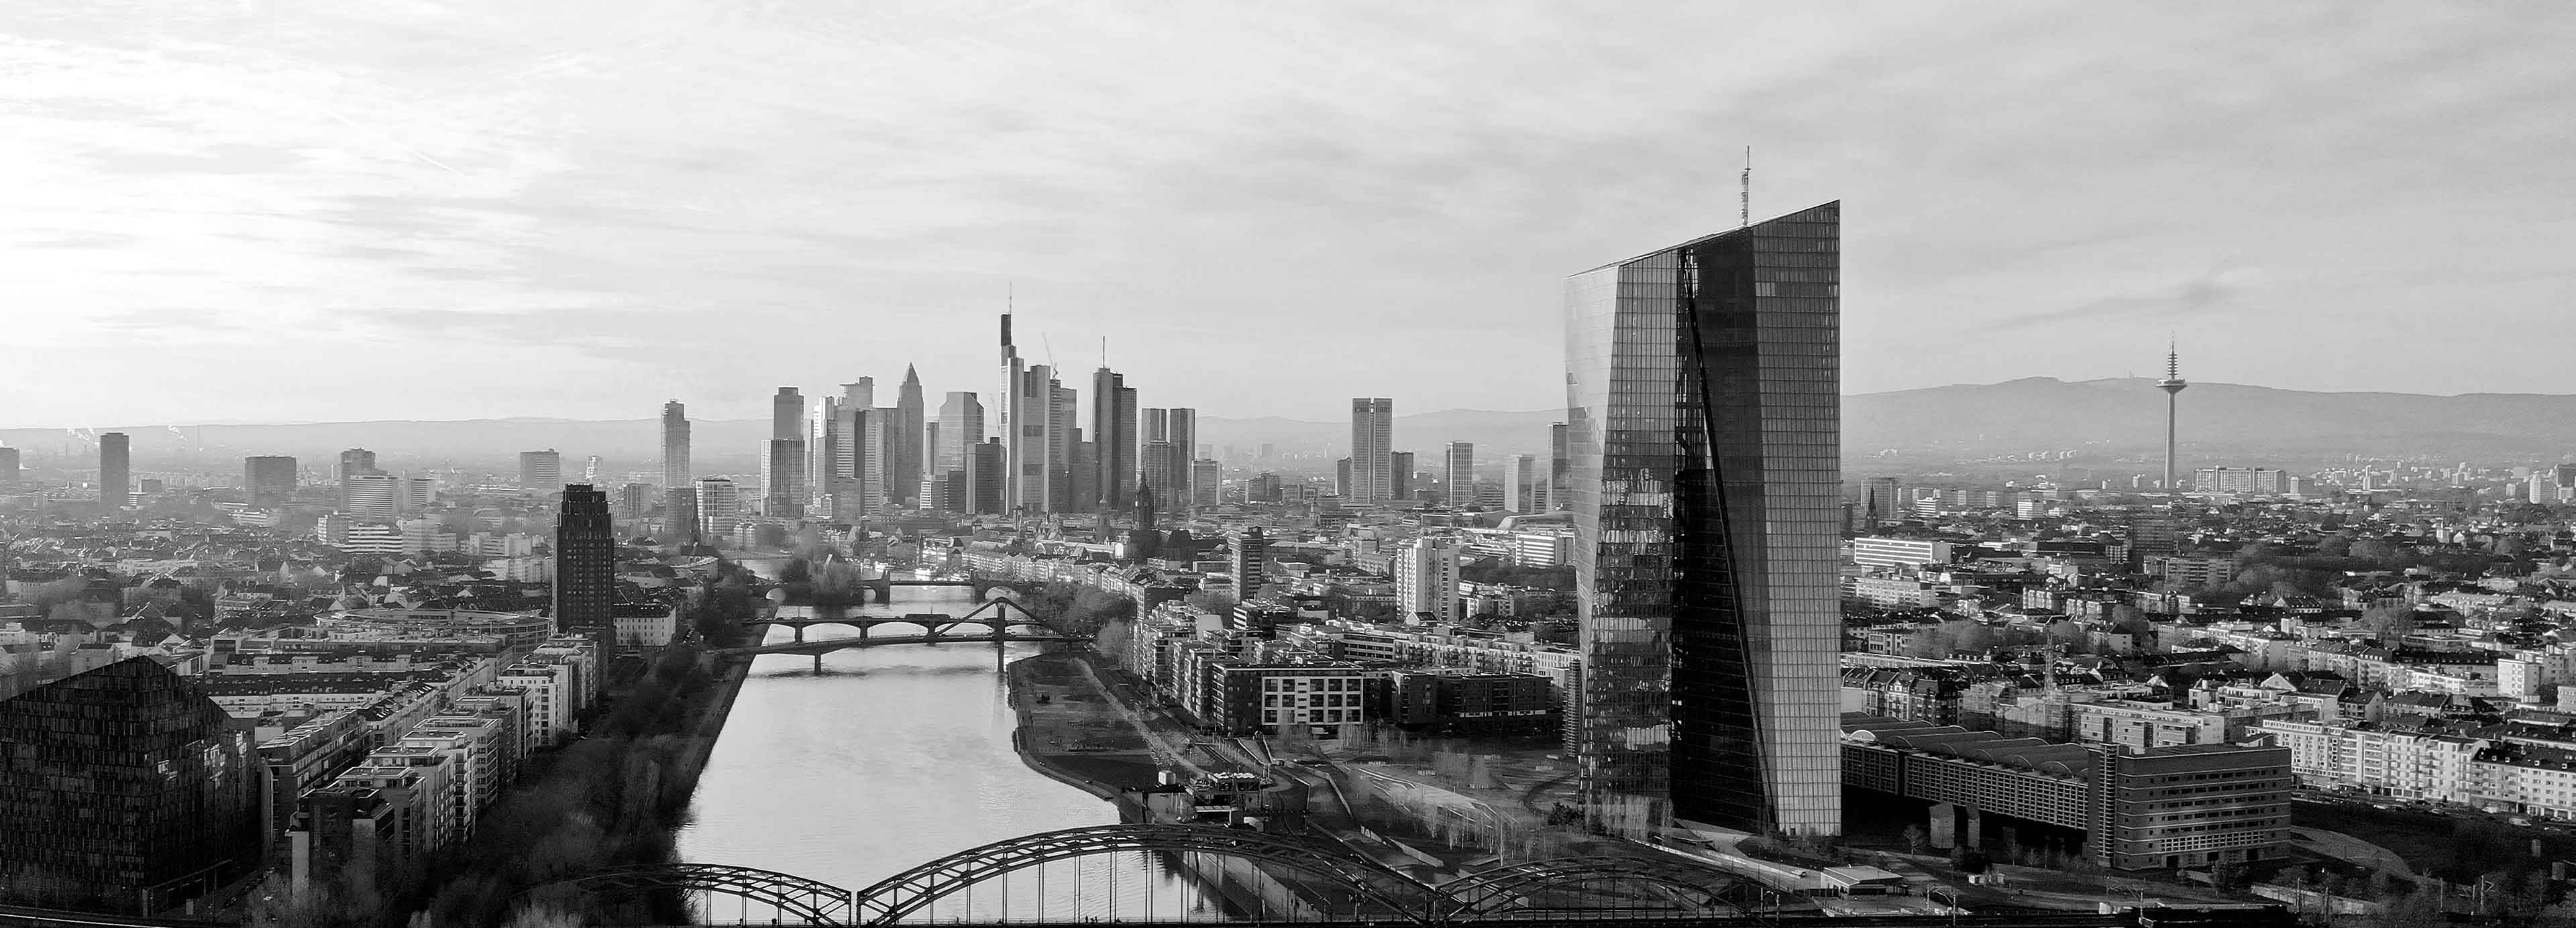 The HAPP - Frankfurt Skyline